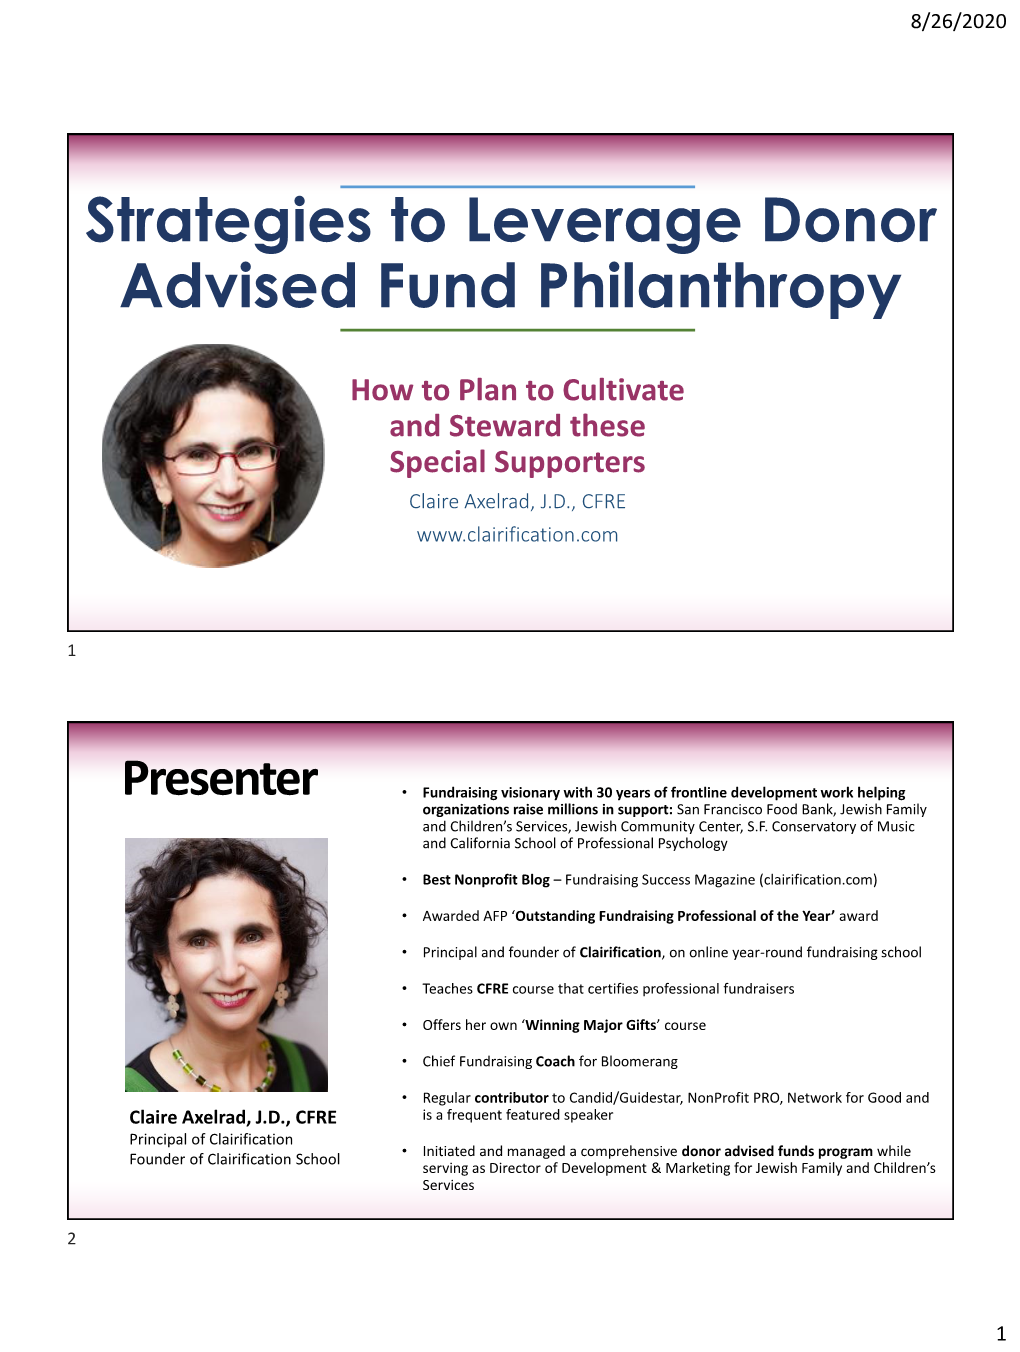 Strategies to Leverage Donor Advised Fund Philanthropy